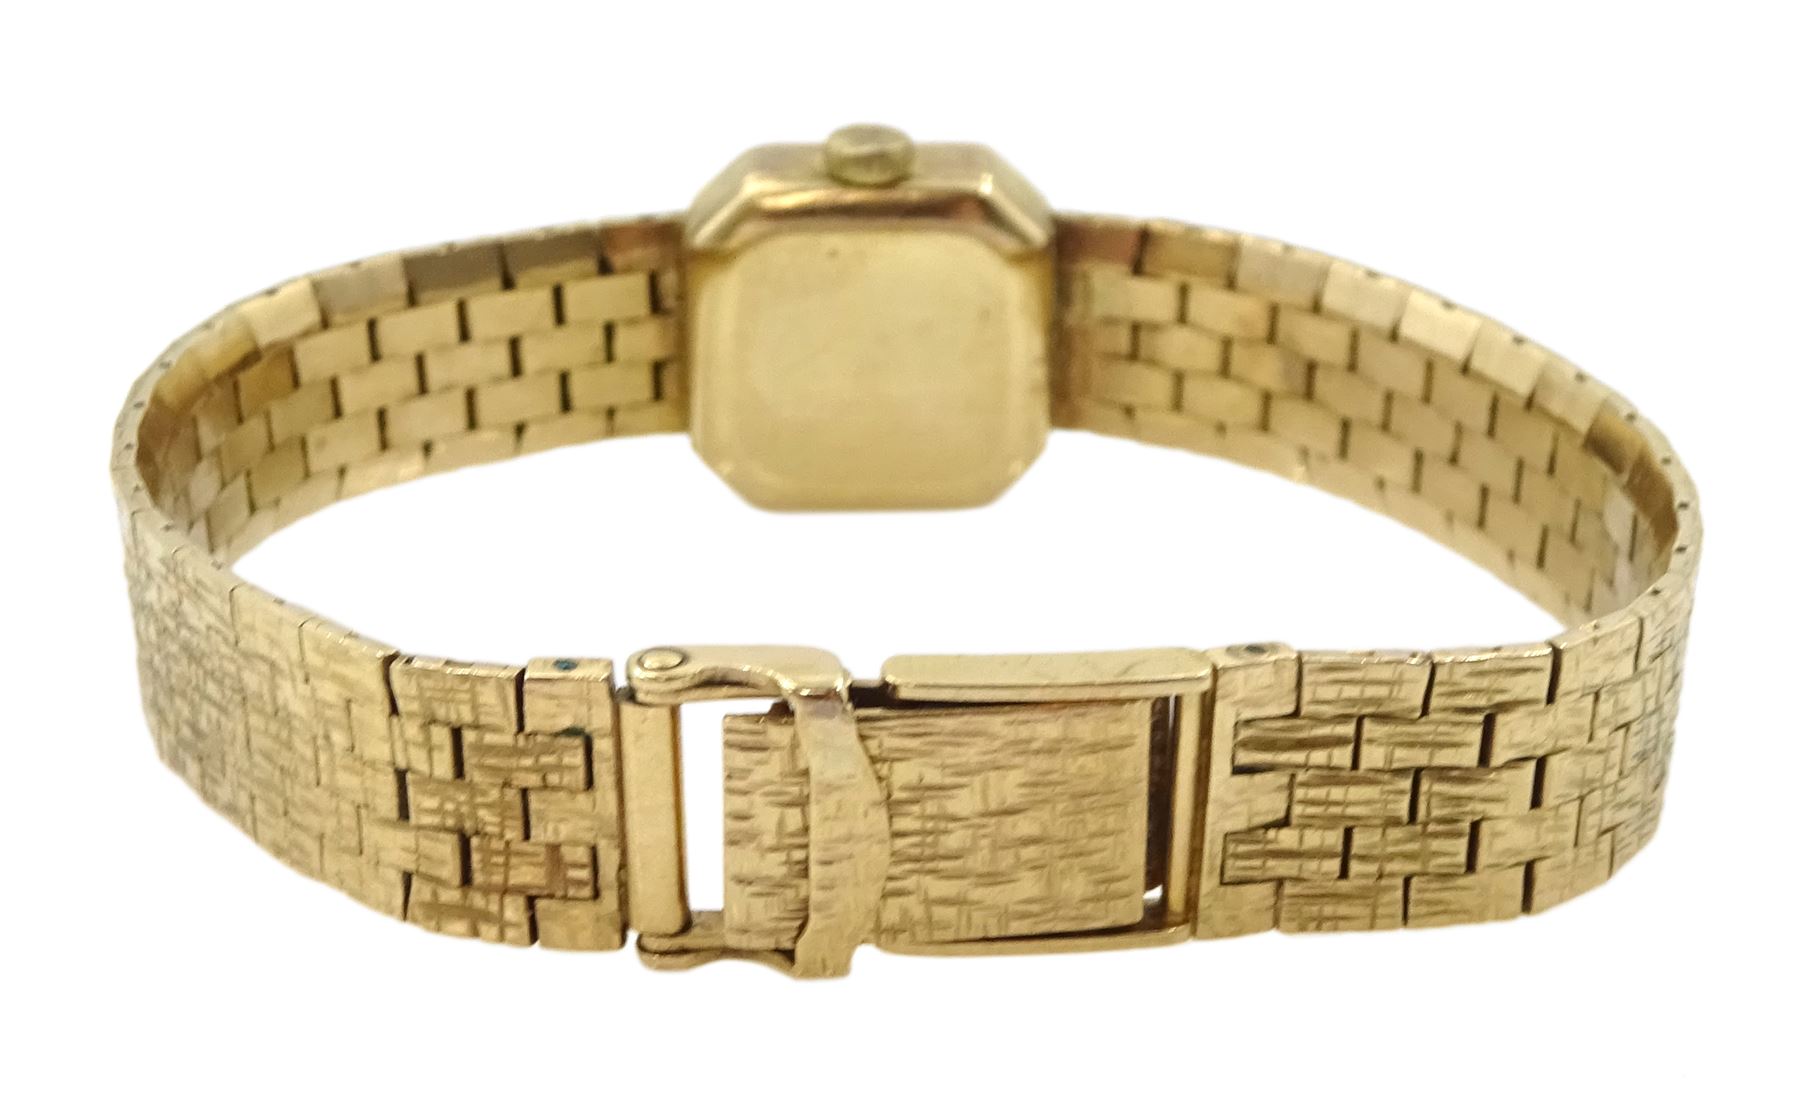 Bueche Girod ladies 9ct gold manual wind wristwatch - Image 2 of 3